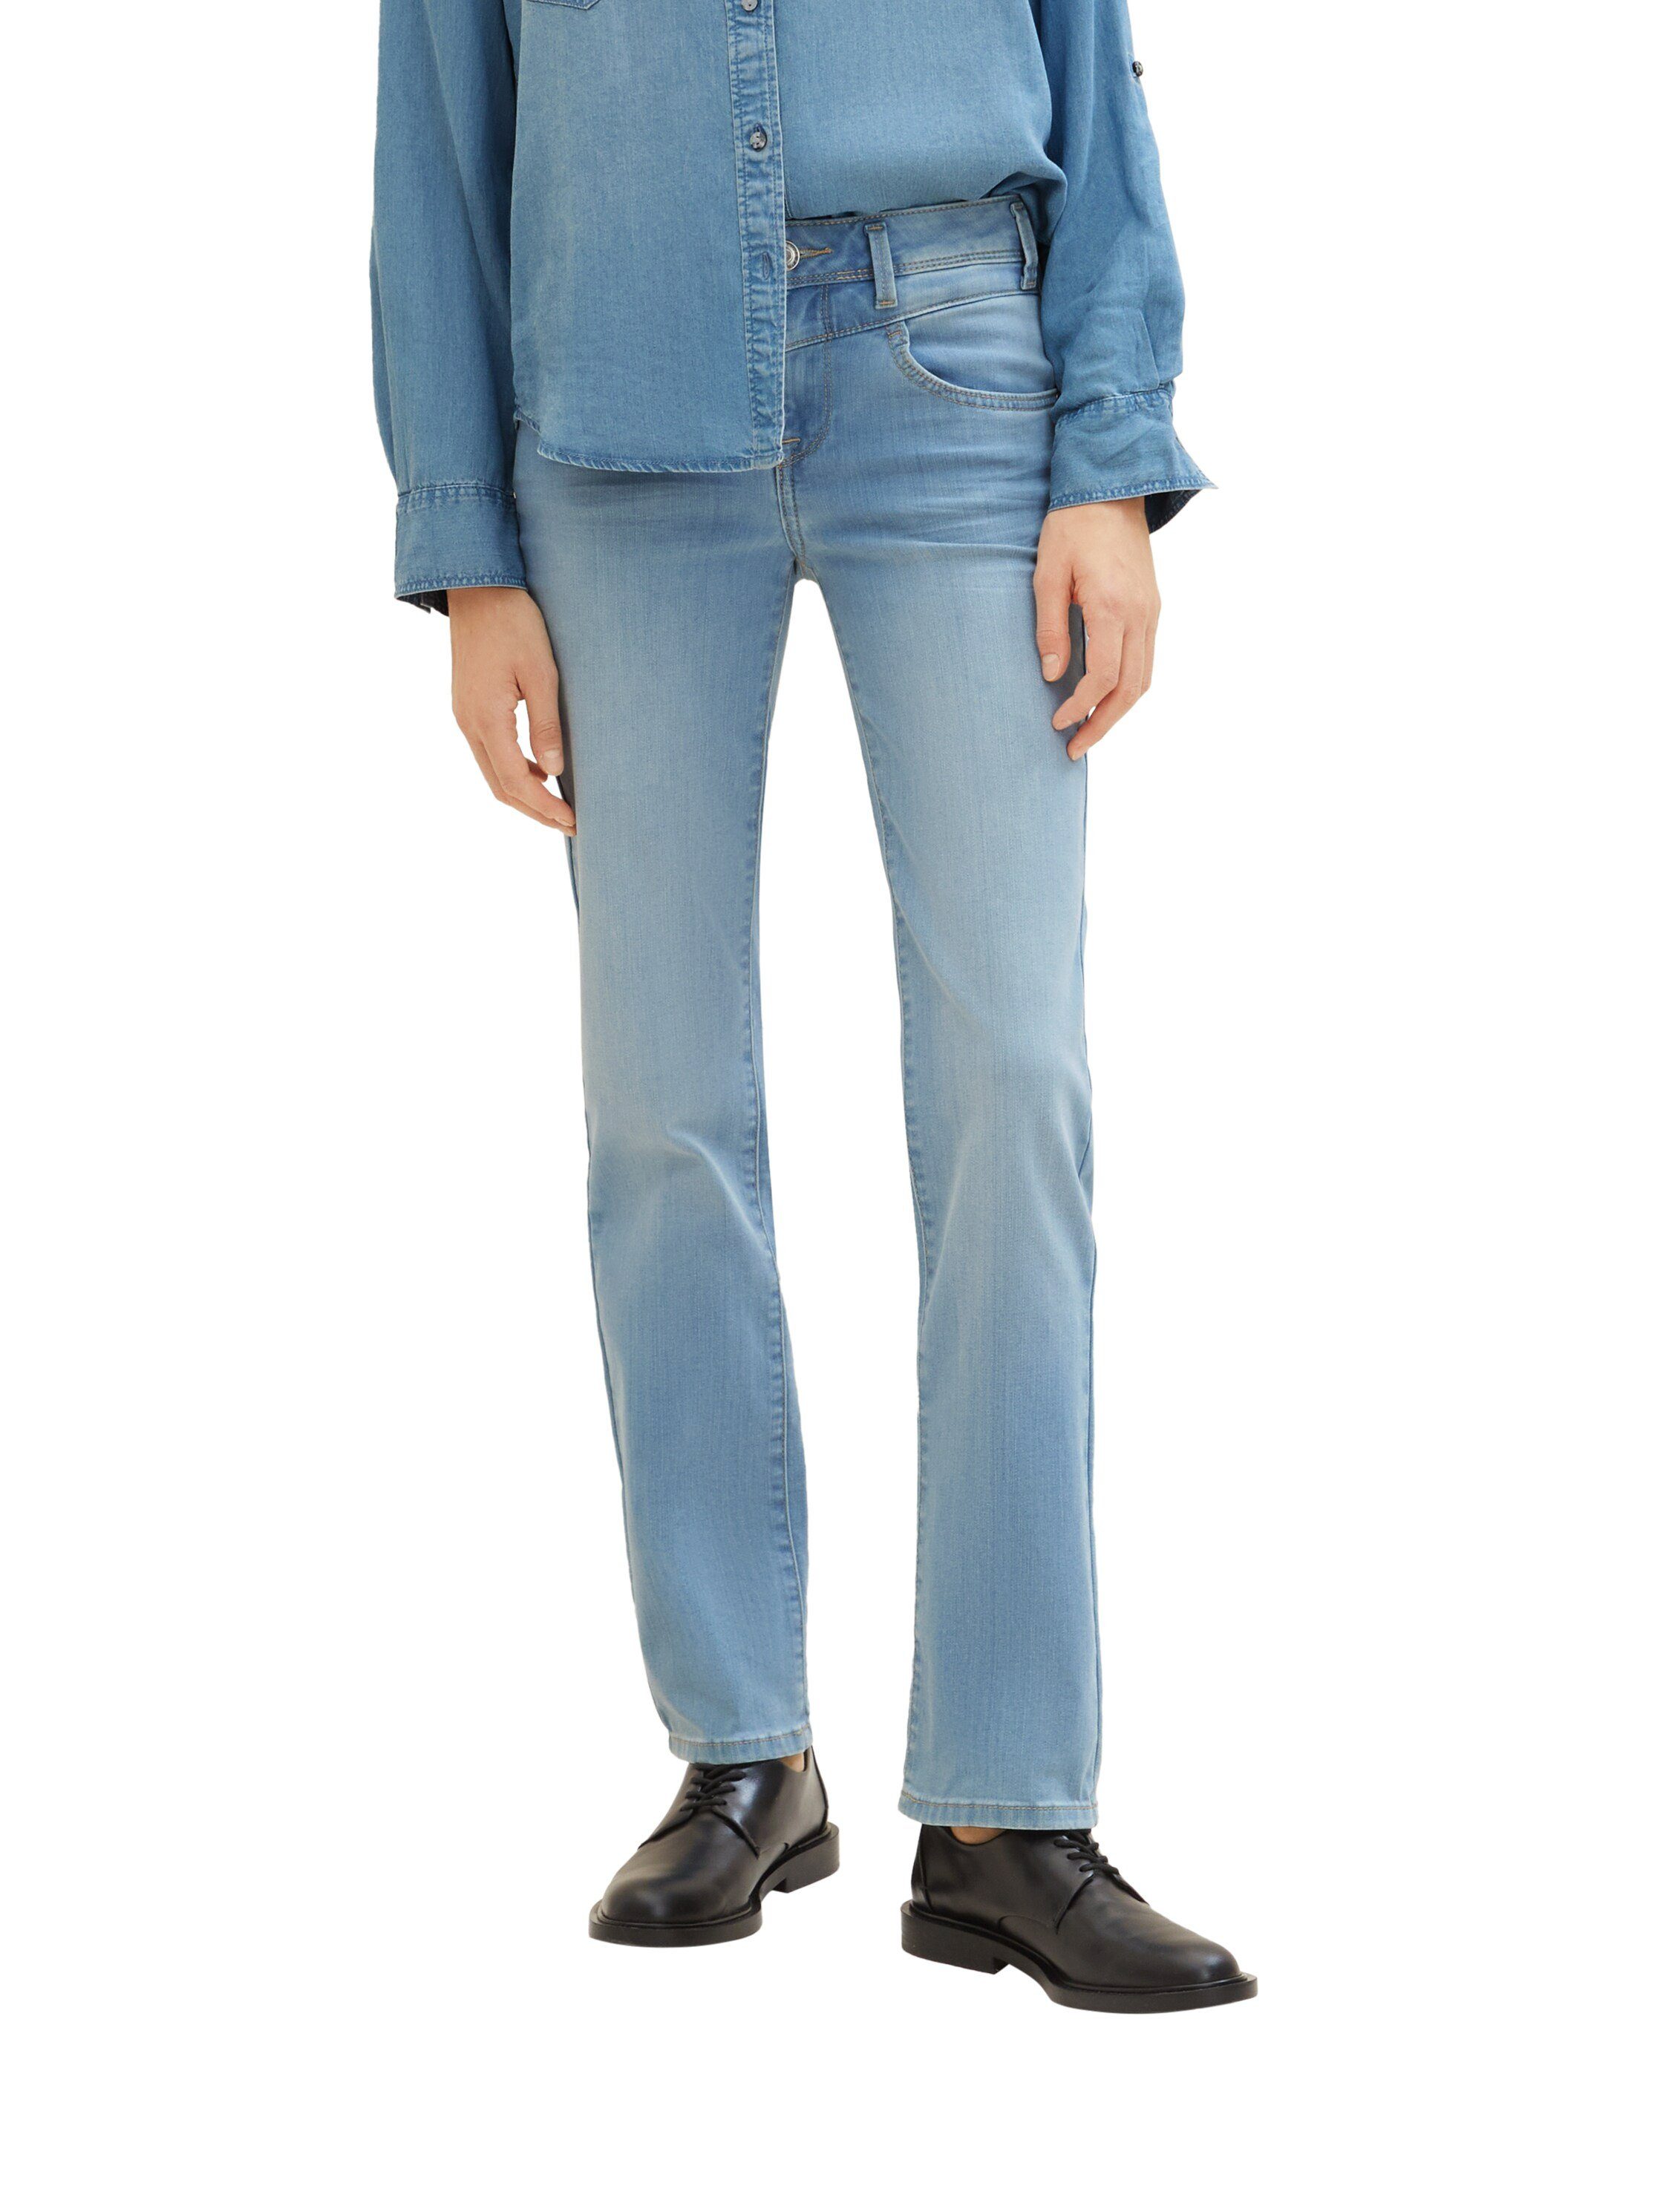 Tom Tailor 5-pocket jeans Alexa straight